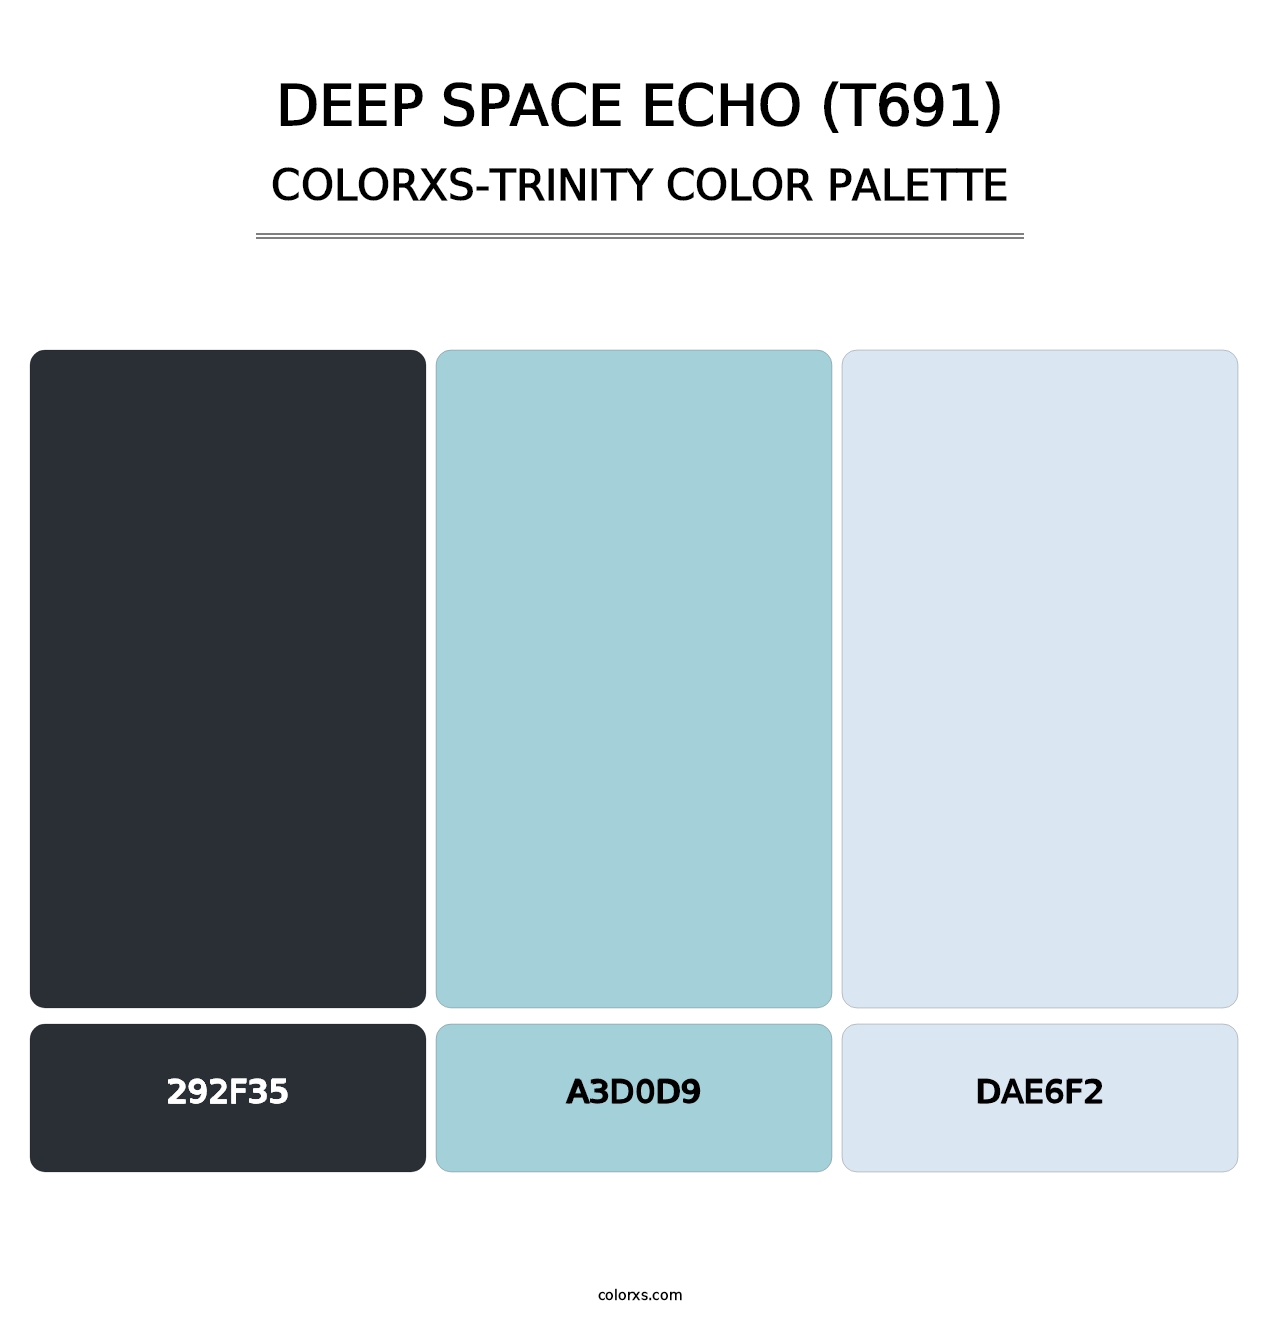 Deep Space Echo (T691) - Colorxs Trinity Palette